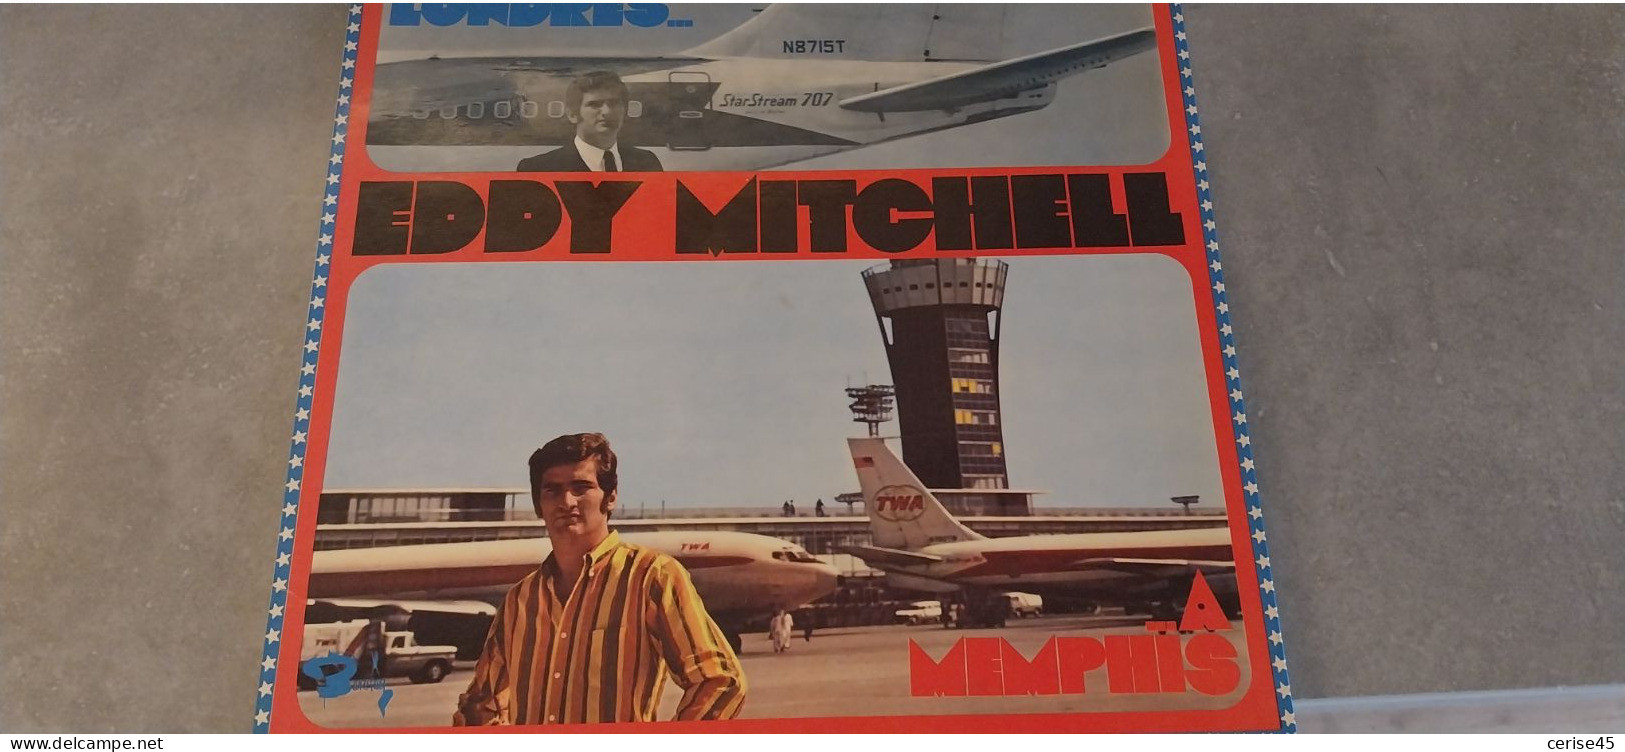 33 TOURS EDDY MITCHELL DE LONDRES A MENPHIS  ENREGISTRE EN 1967 - Otros - Canción Francesa